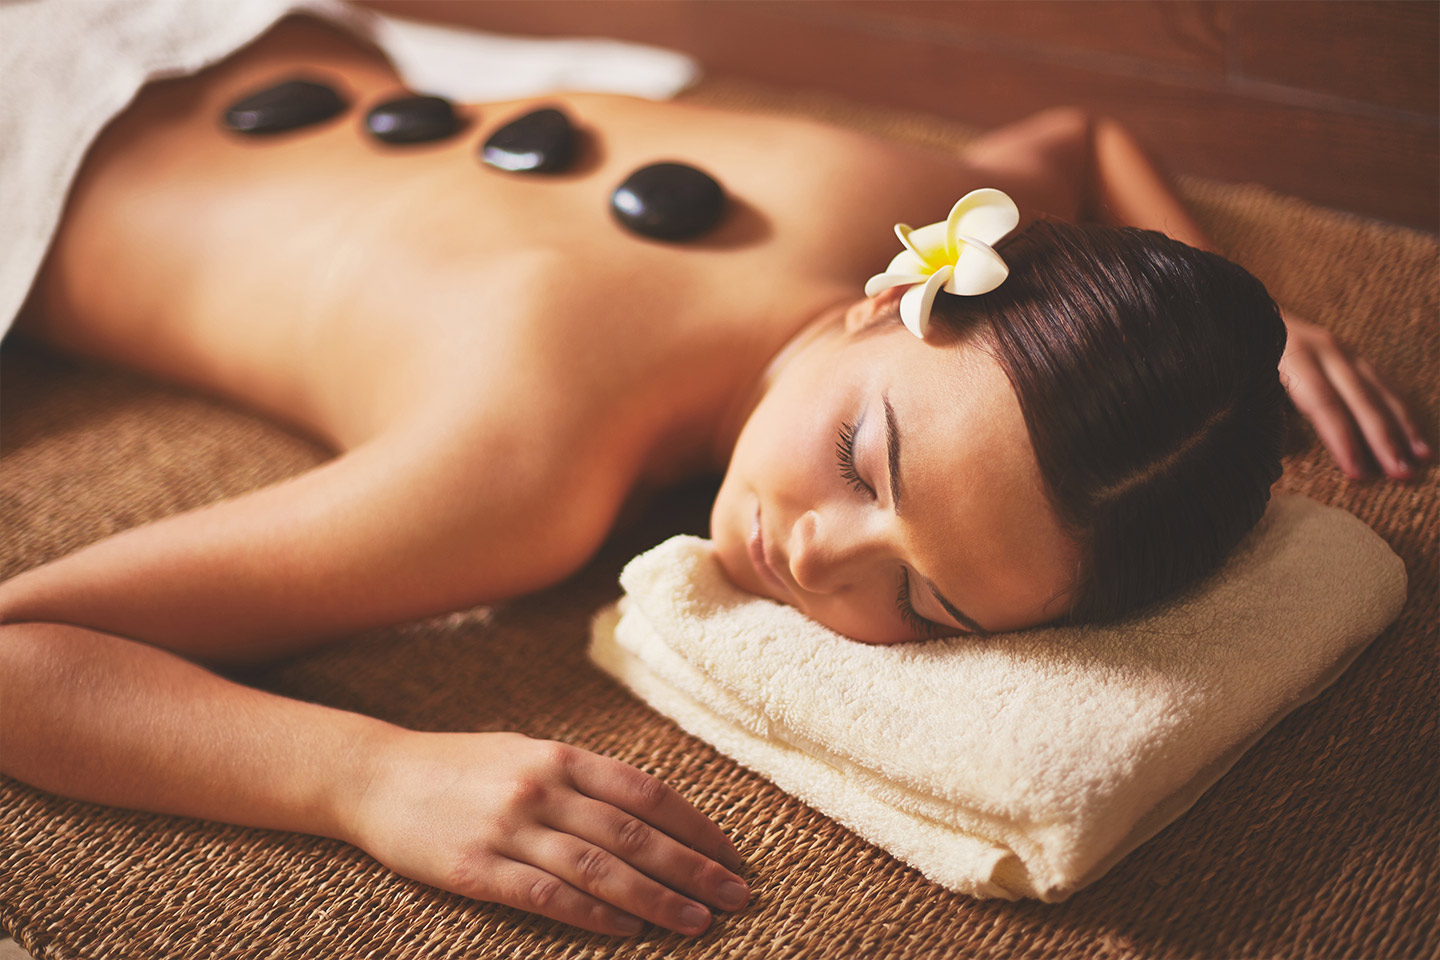 Massage Treatments, Swedish, Lomi Lomi, Sports Massage, on Maui, Lanai or in your hotel room.